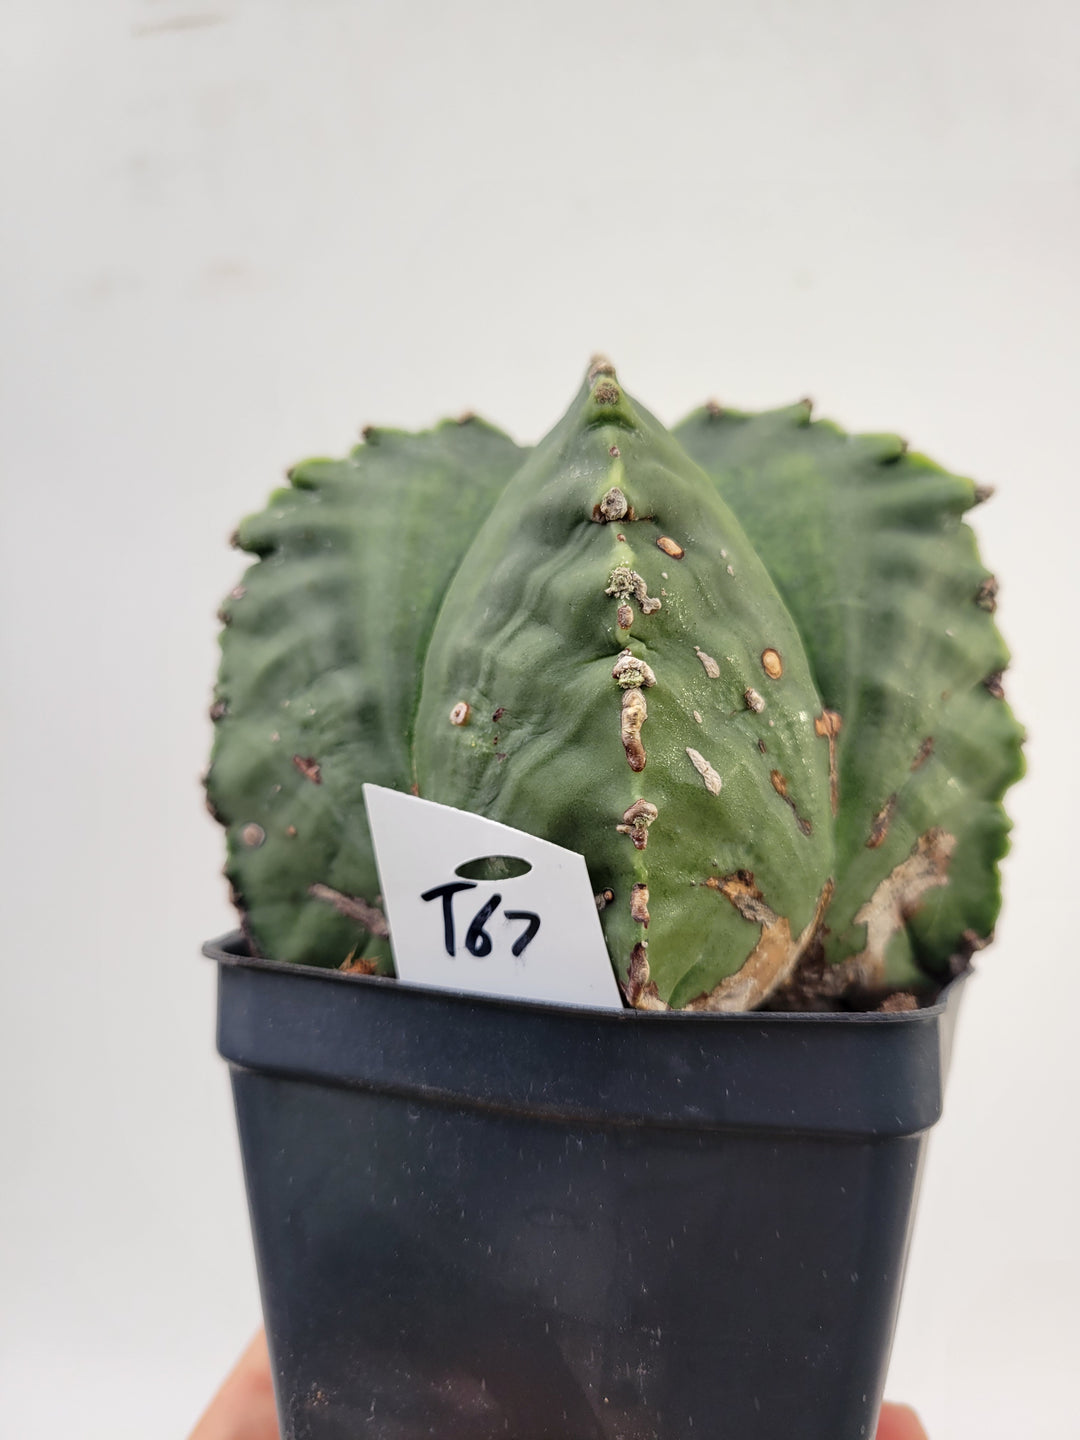 Astrophytum Myriostigma Nudum "KIKKO" . 4" pot, very established, Specimen size XXL  #T67 - Nice Plants Good Pots